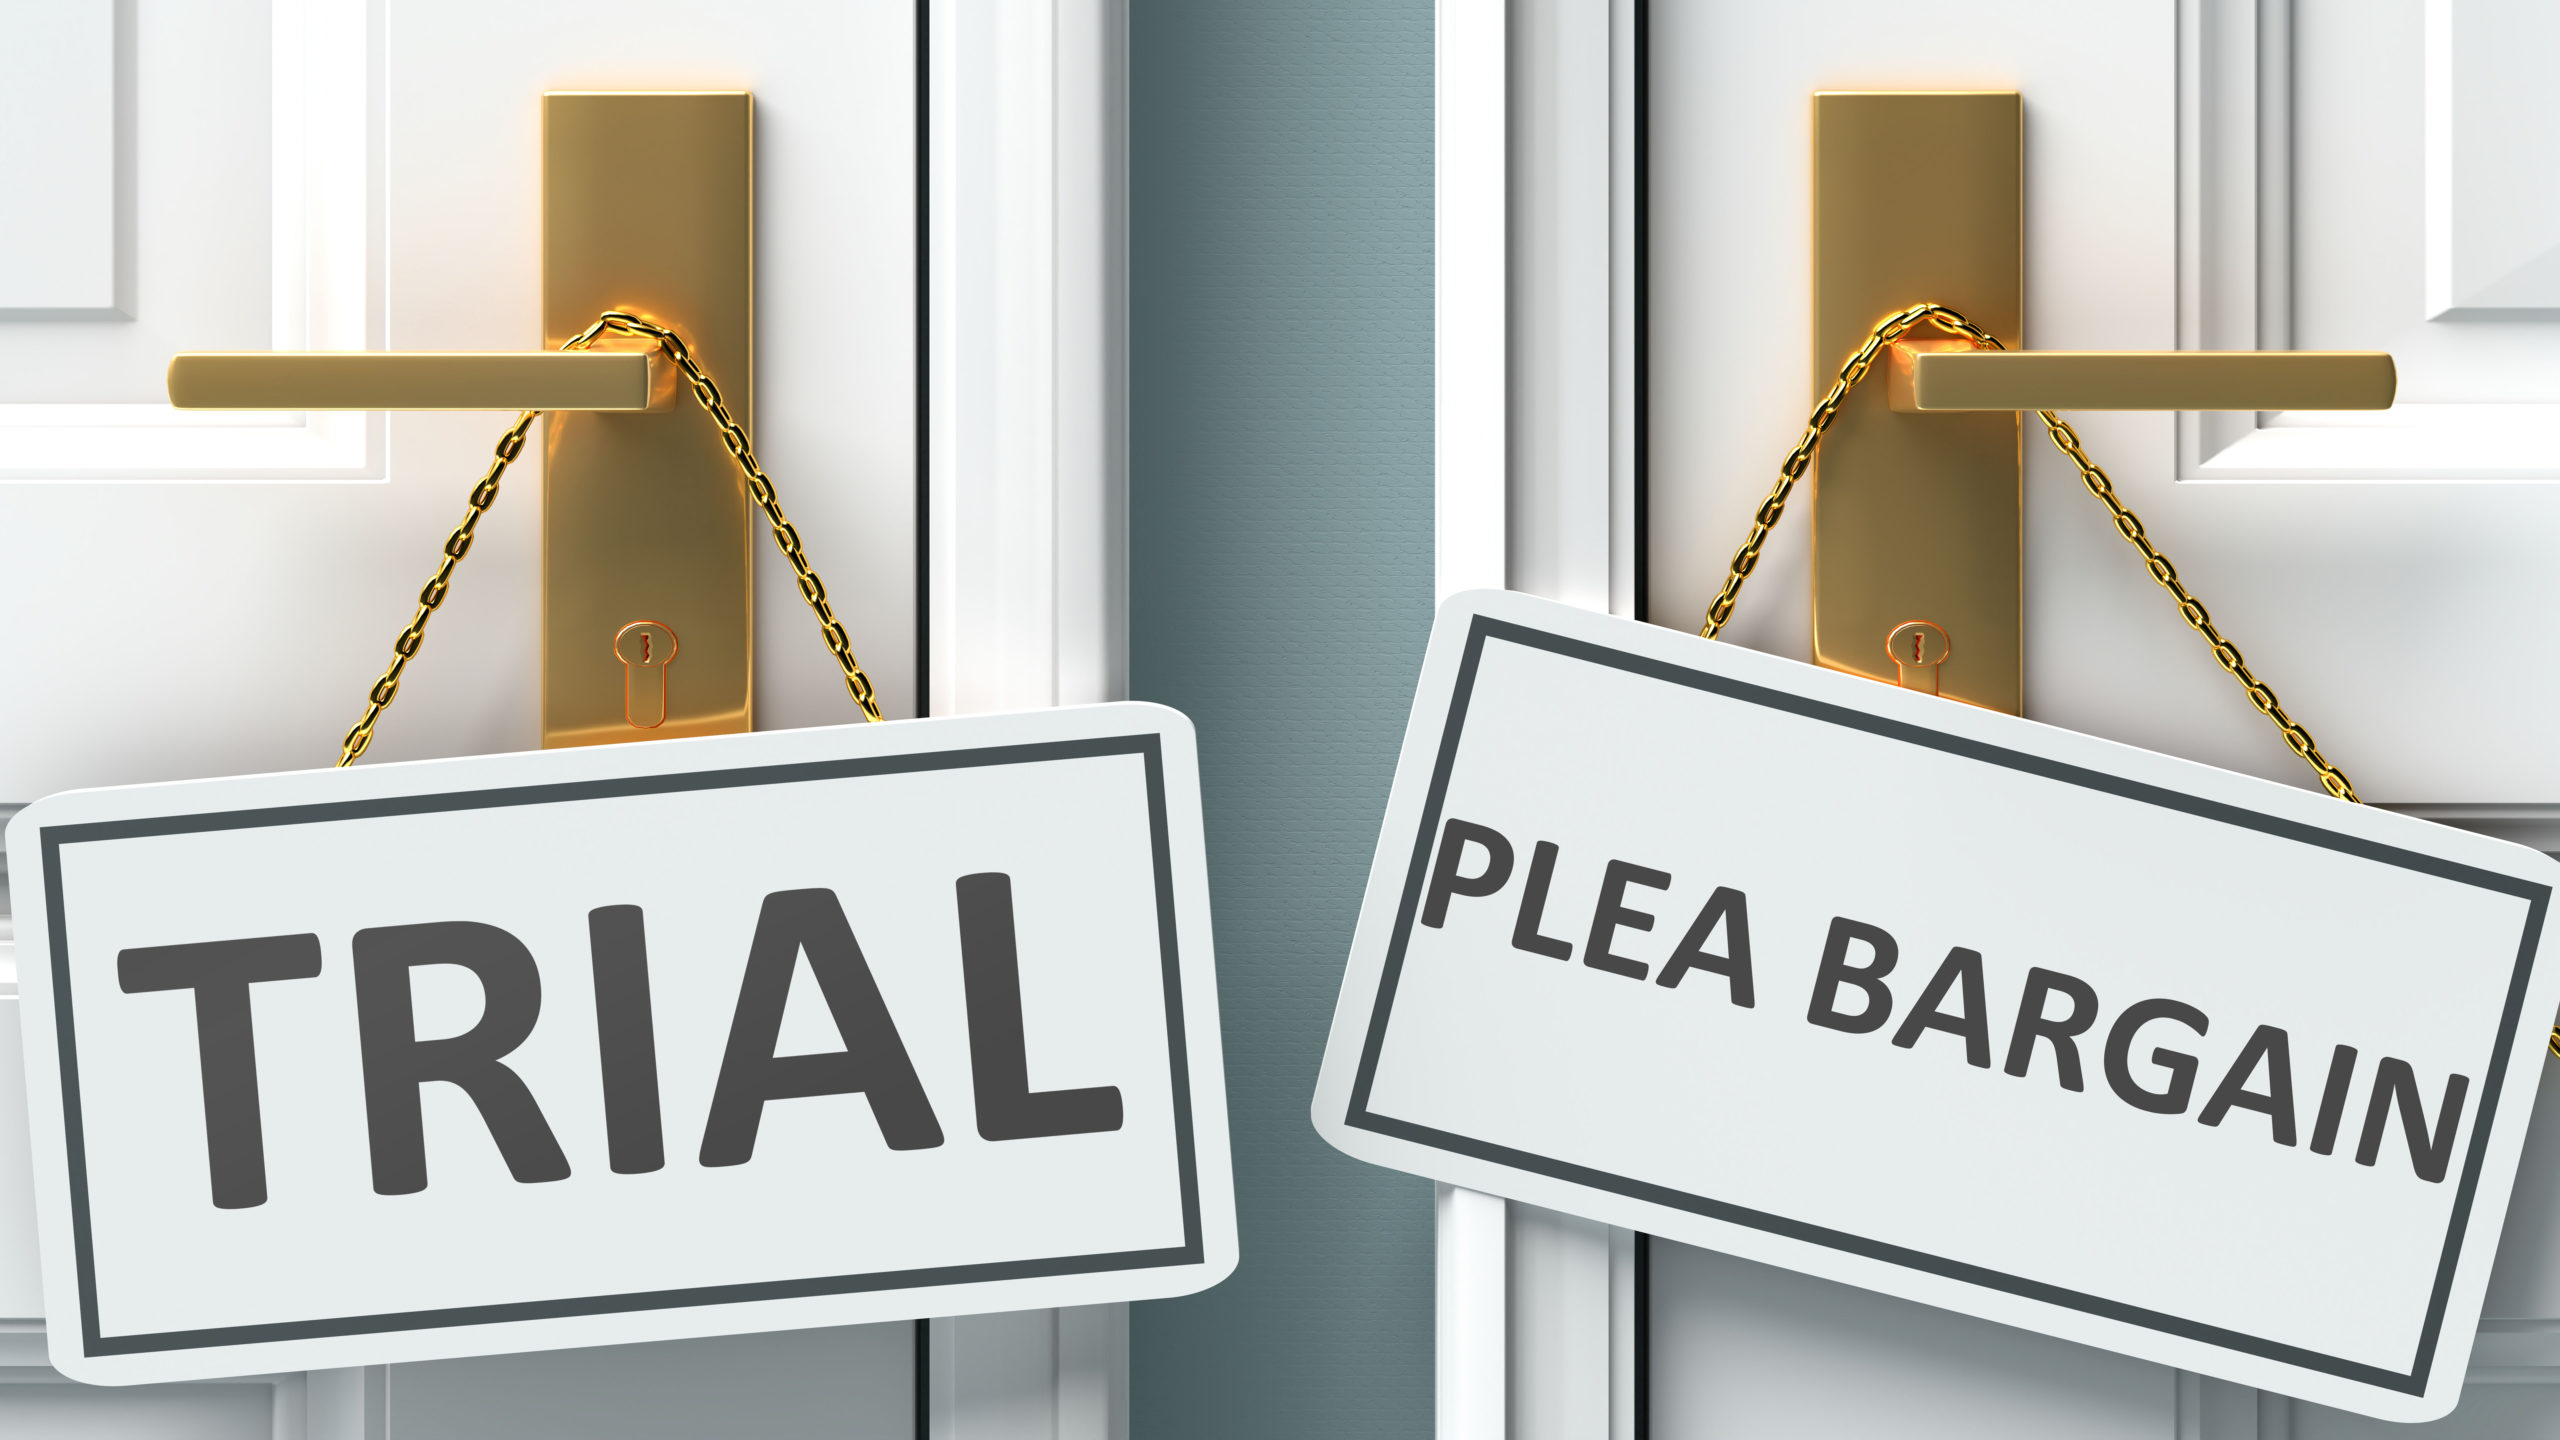 What is a Plea Bargain?